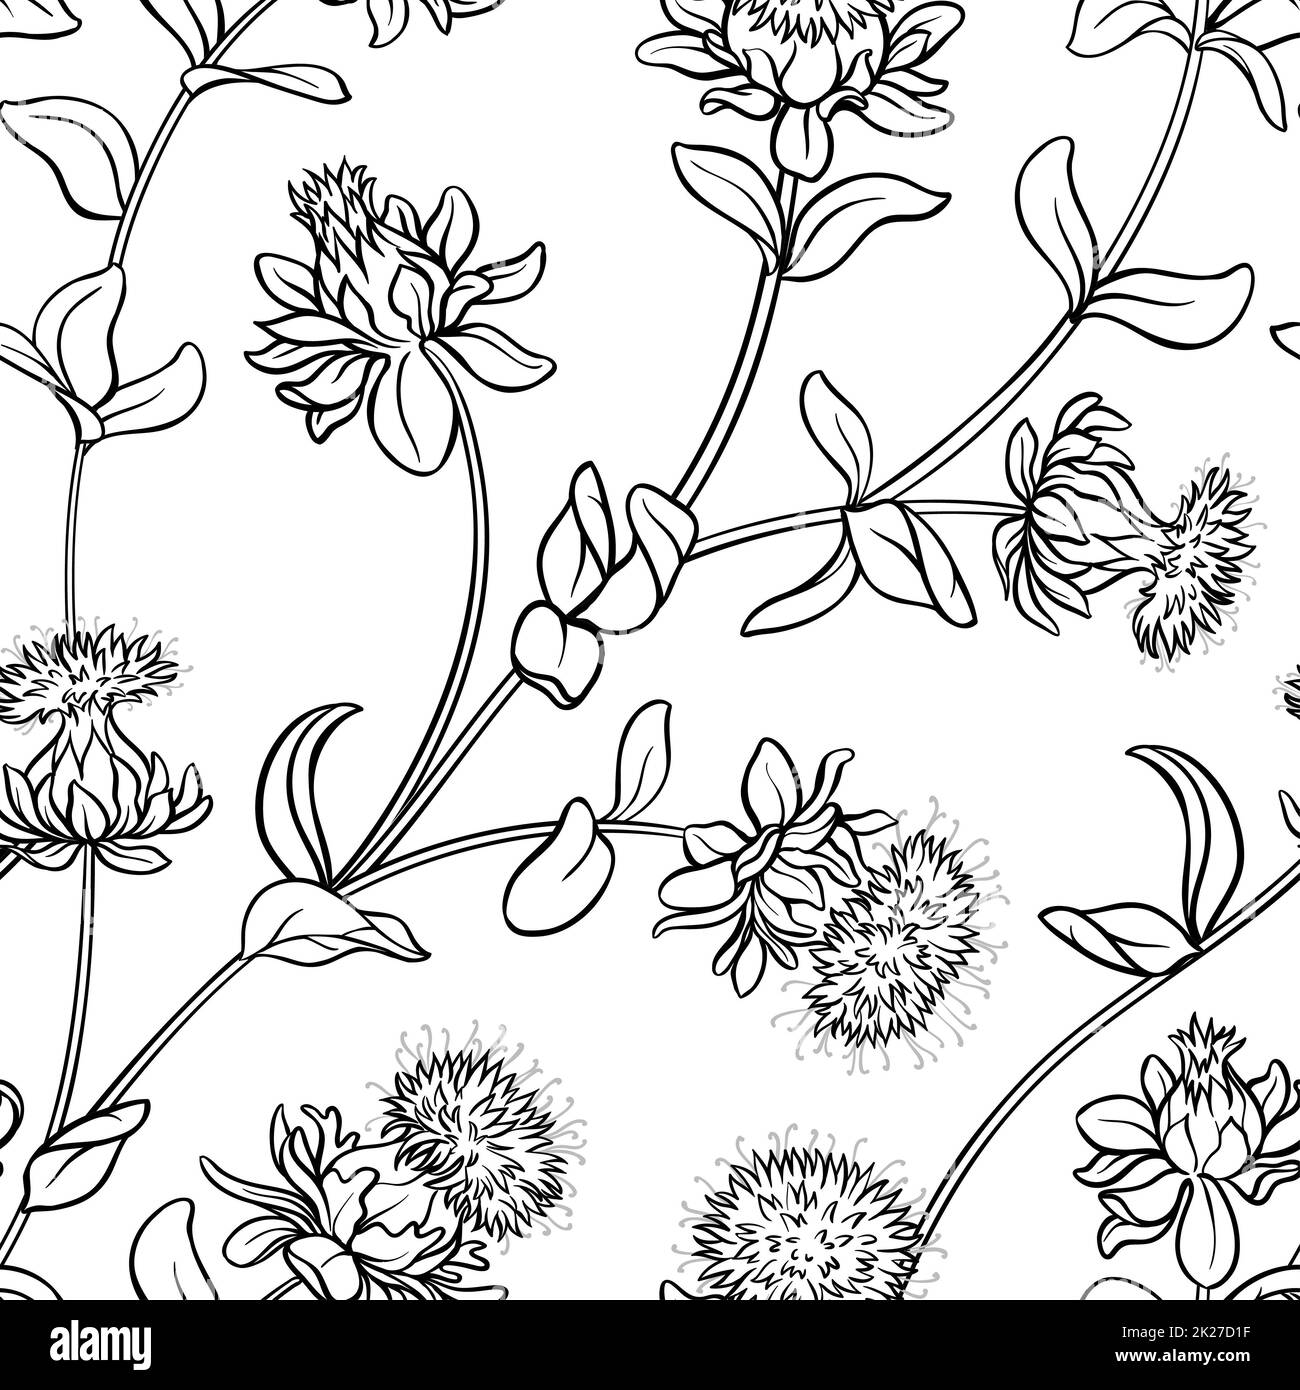 safflower seamless pattern Stock Photo